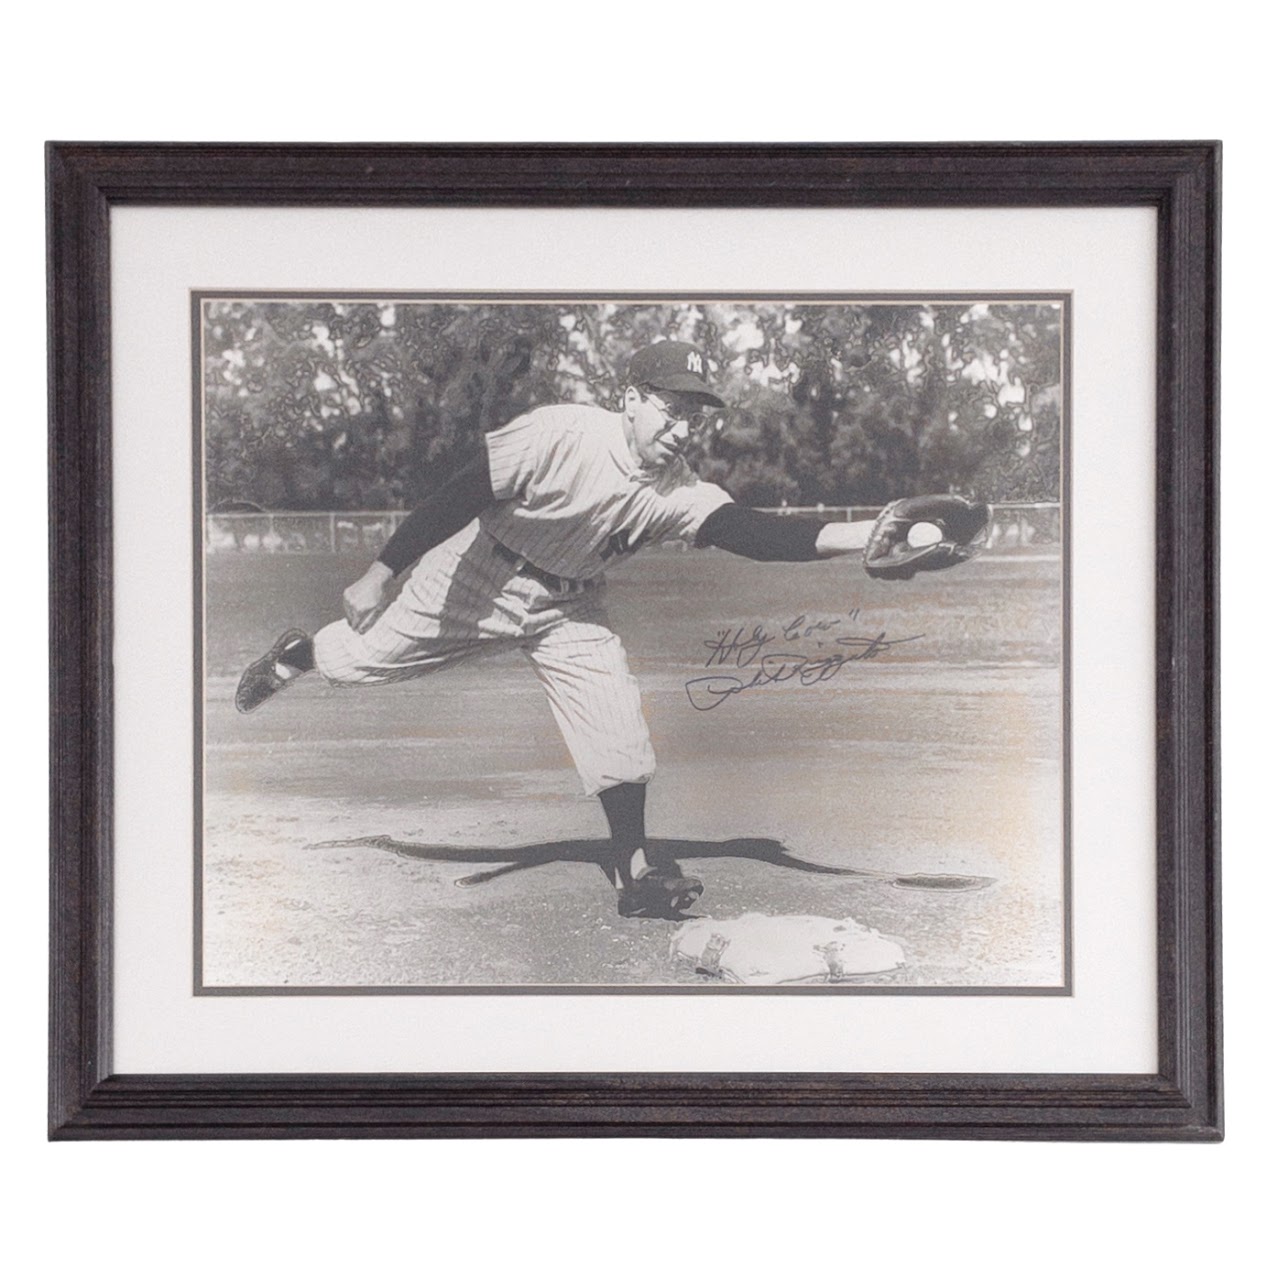 Vintage Baseball Player Photograph - Phil Rizzuto